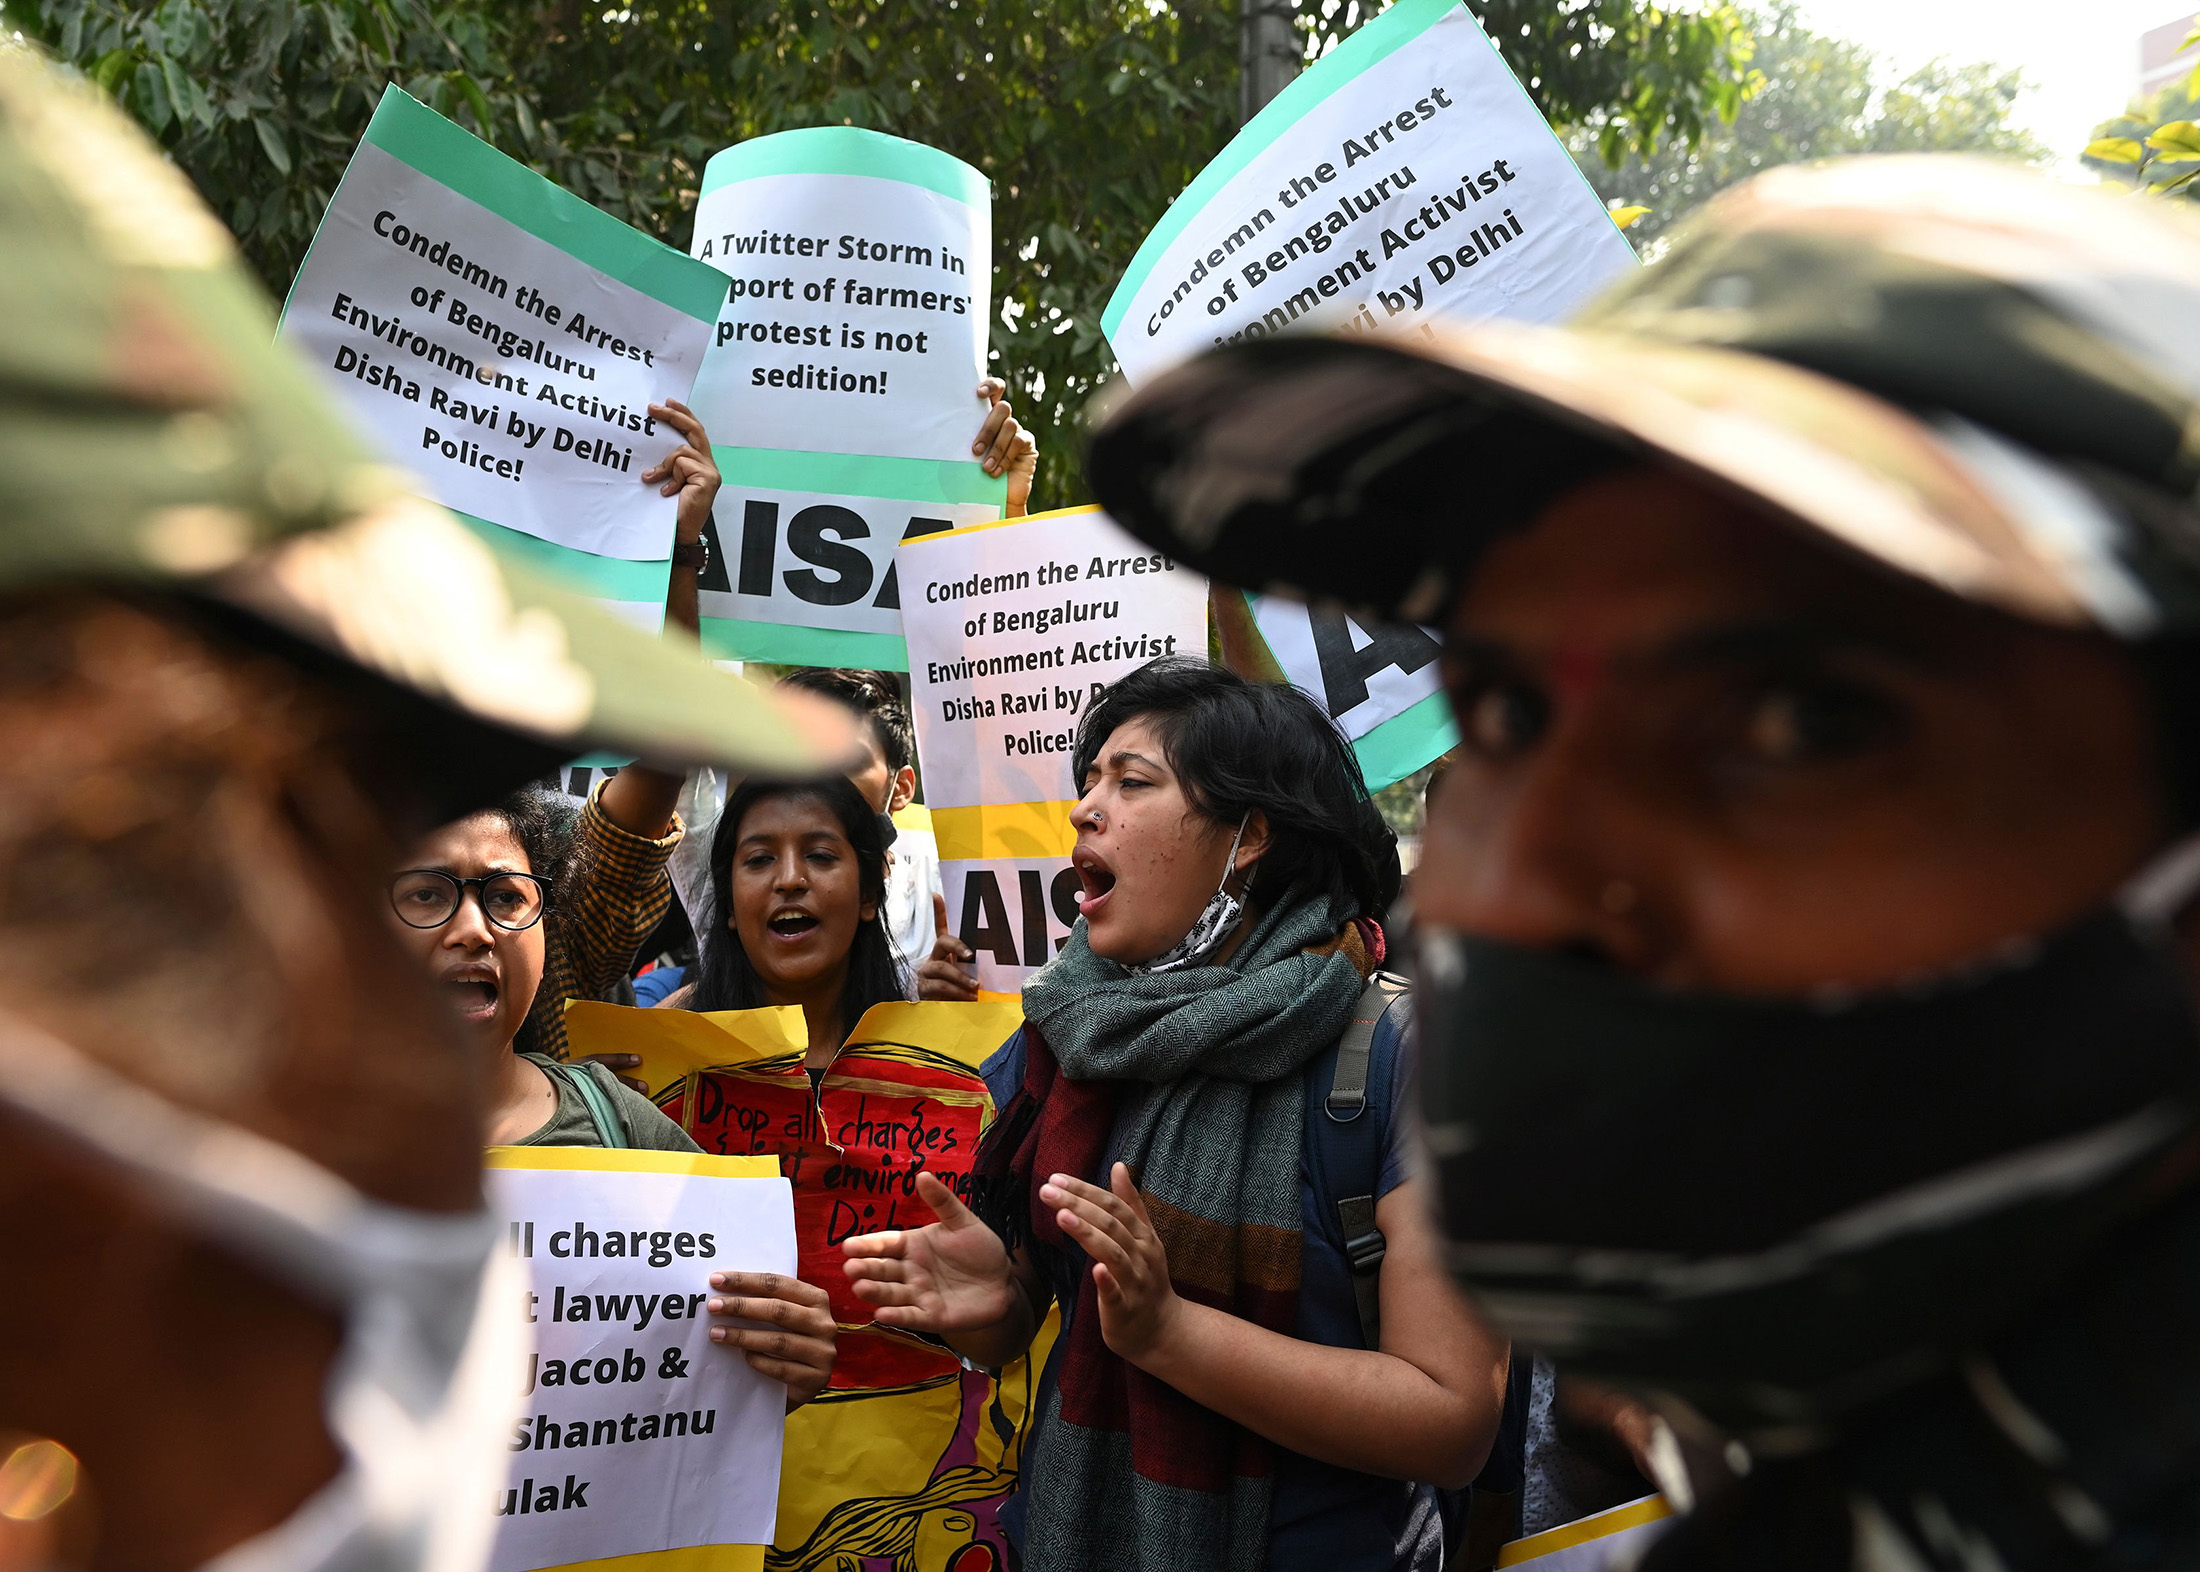 Demonstrators shout slogans during a protest against the arrest of climate change activist Disha Ravi.